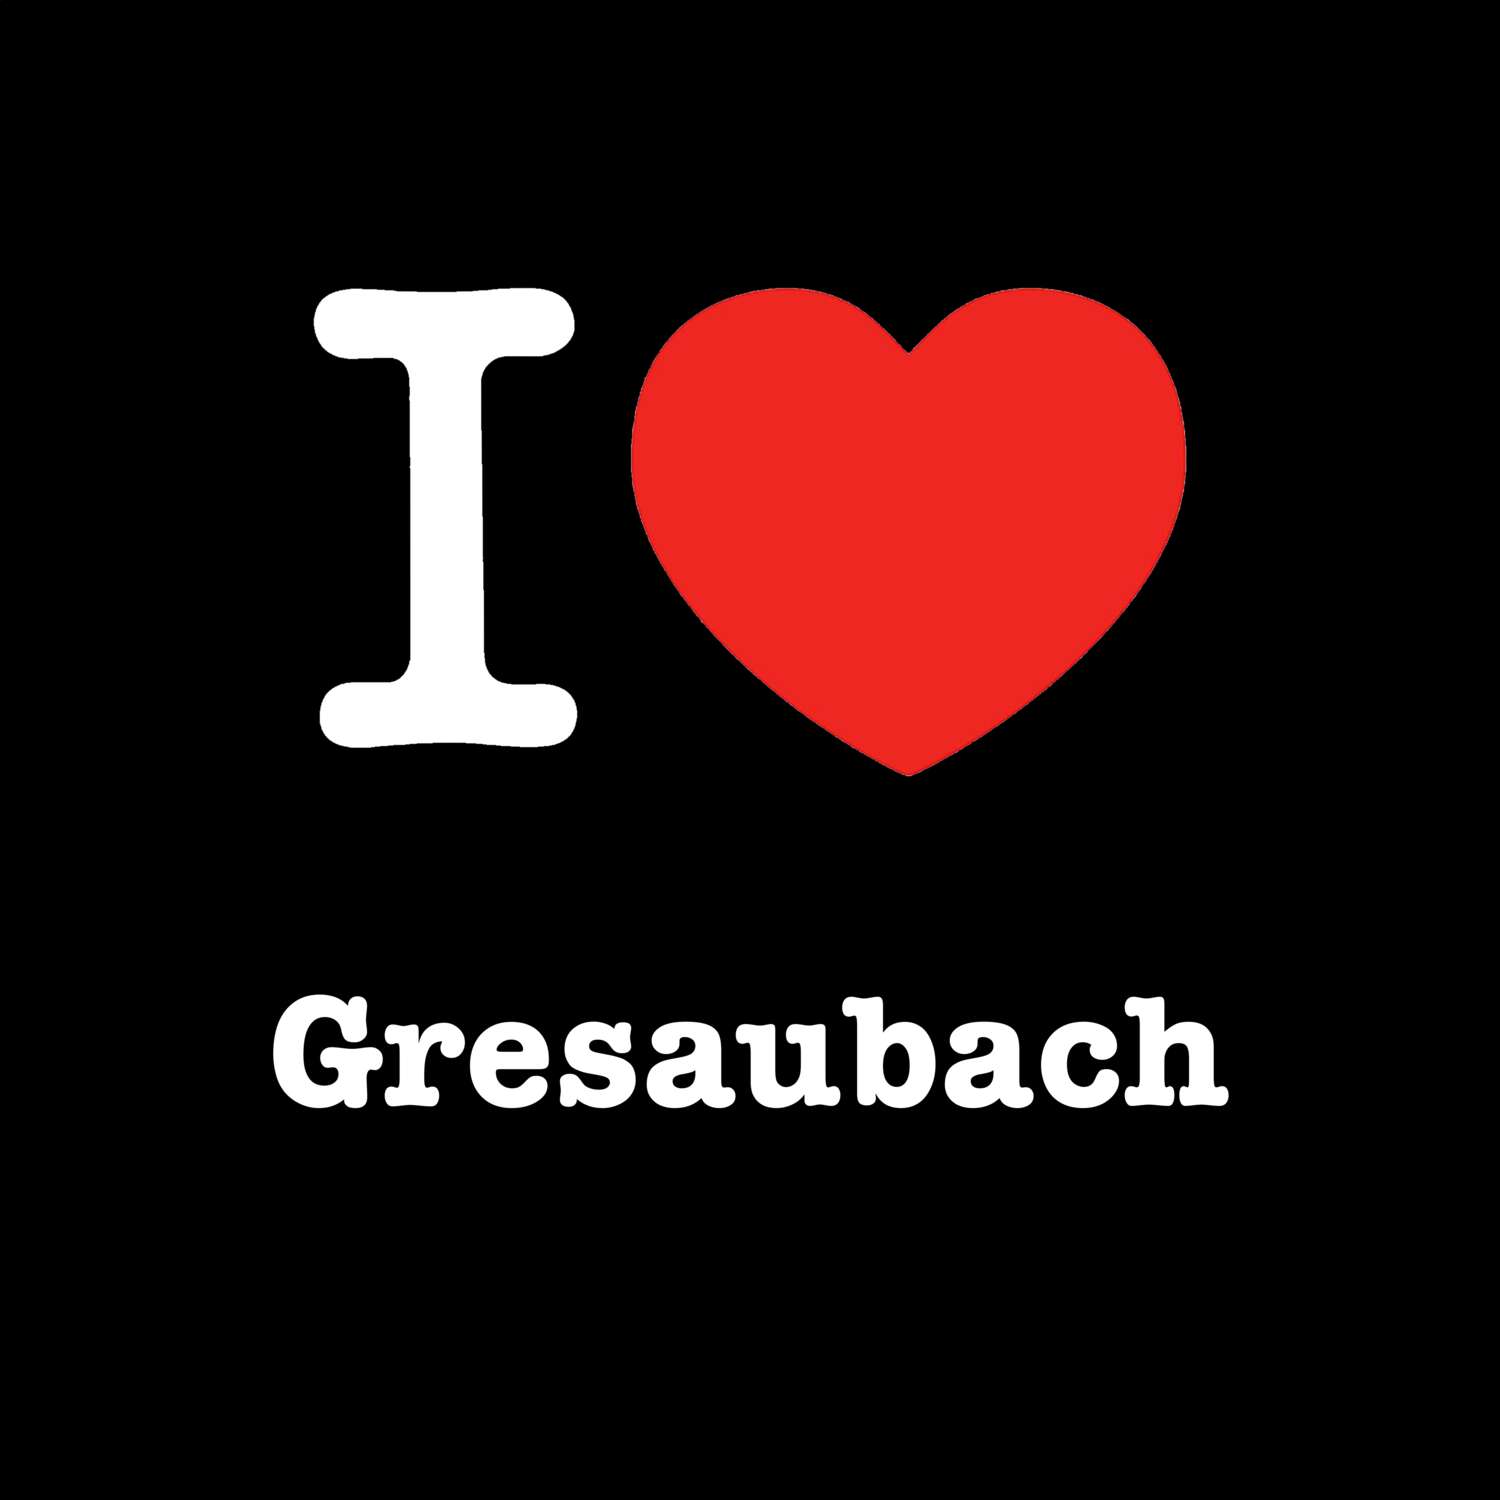 Gresaubach T-Shirt »I love«